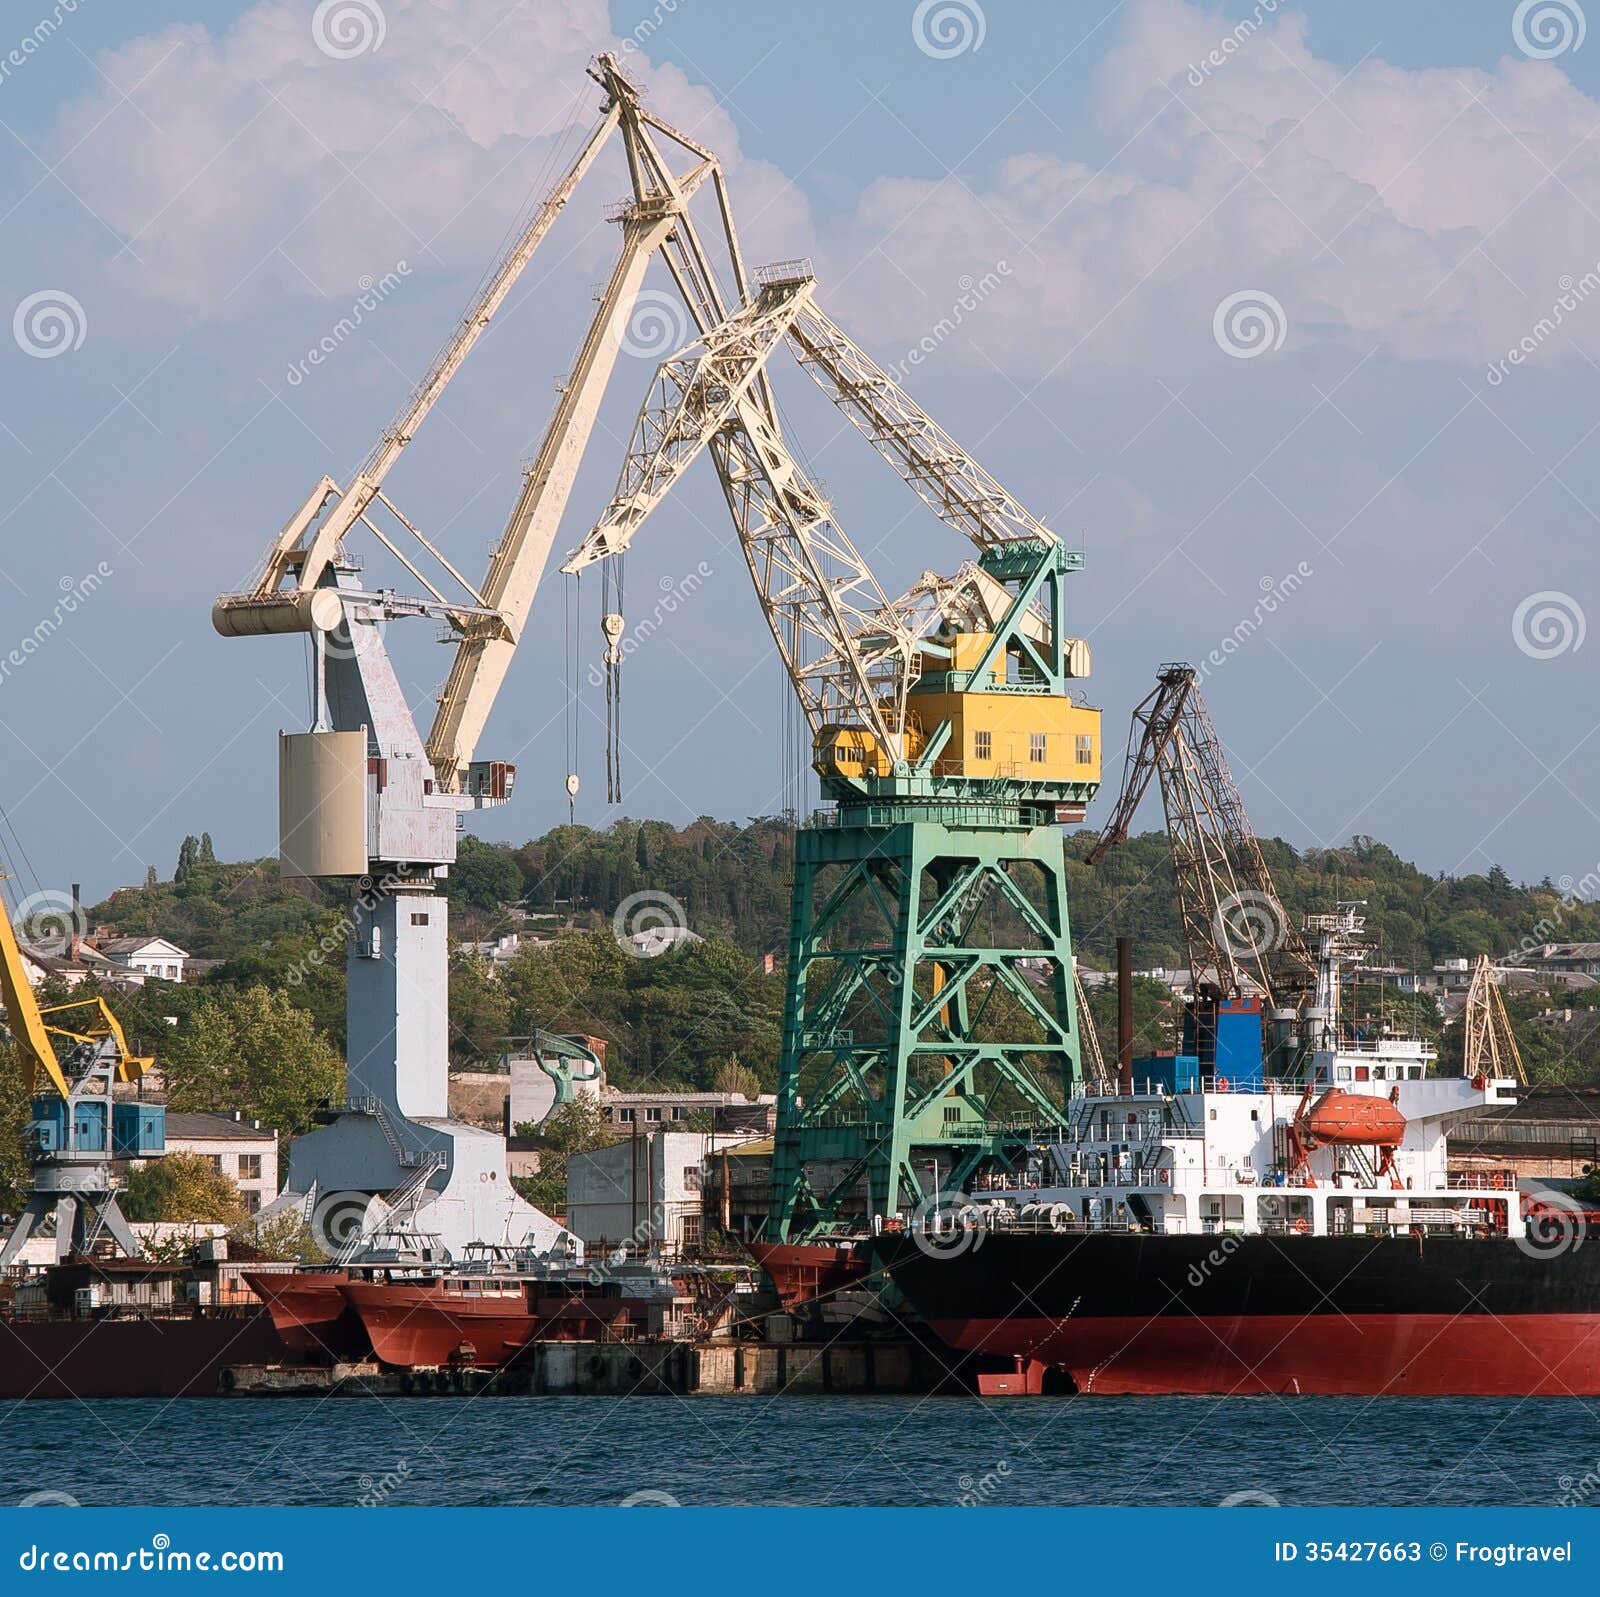 seaport landscape stock photos - image: 35427663